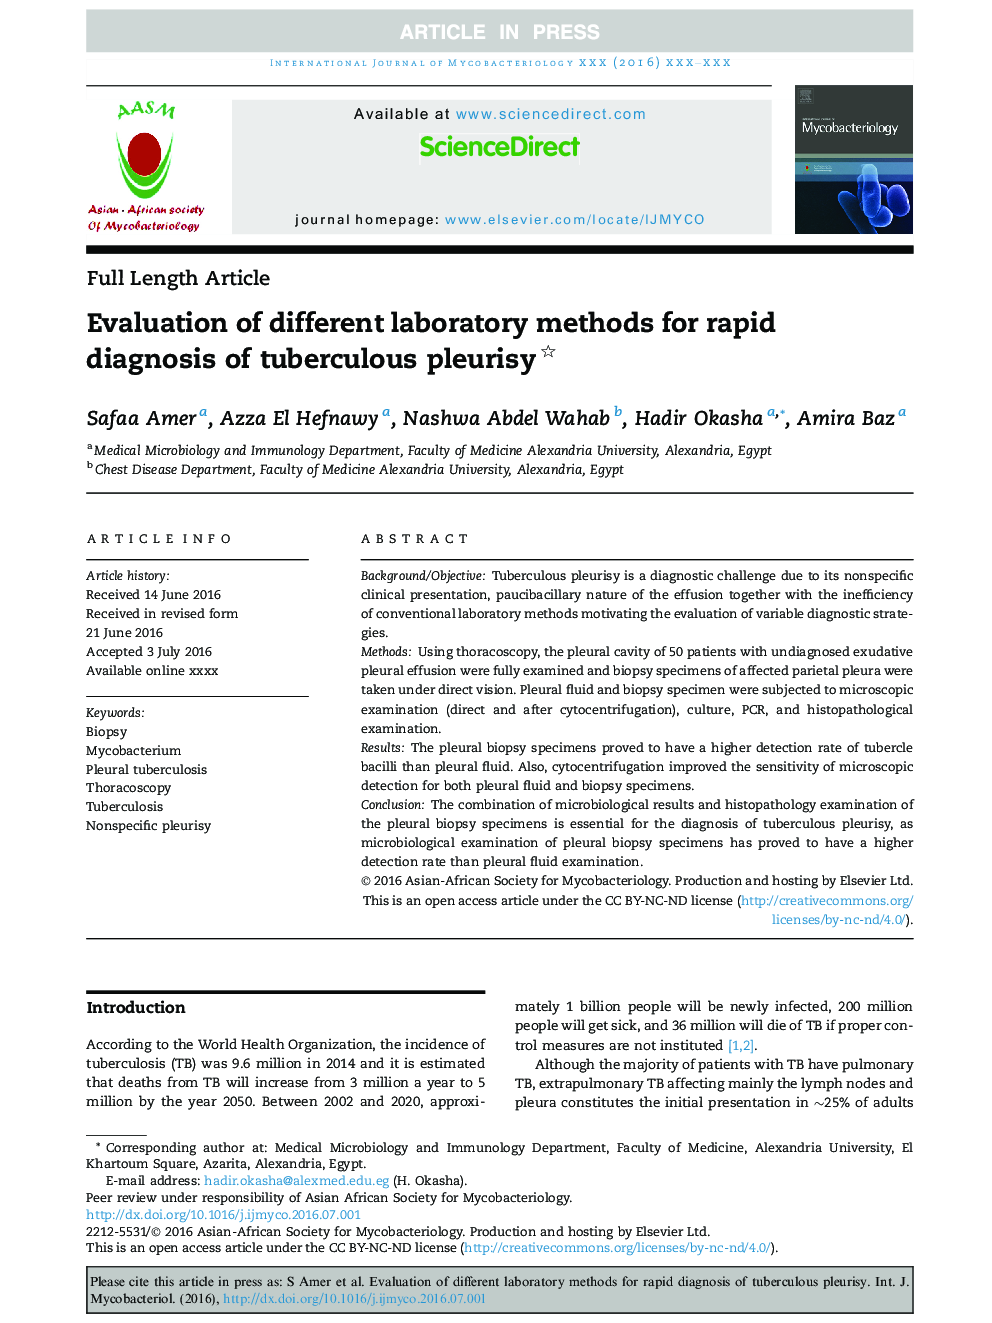 Evaluation of different laboratory methods for rapid diagnosis of tuberculous pleurisy